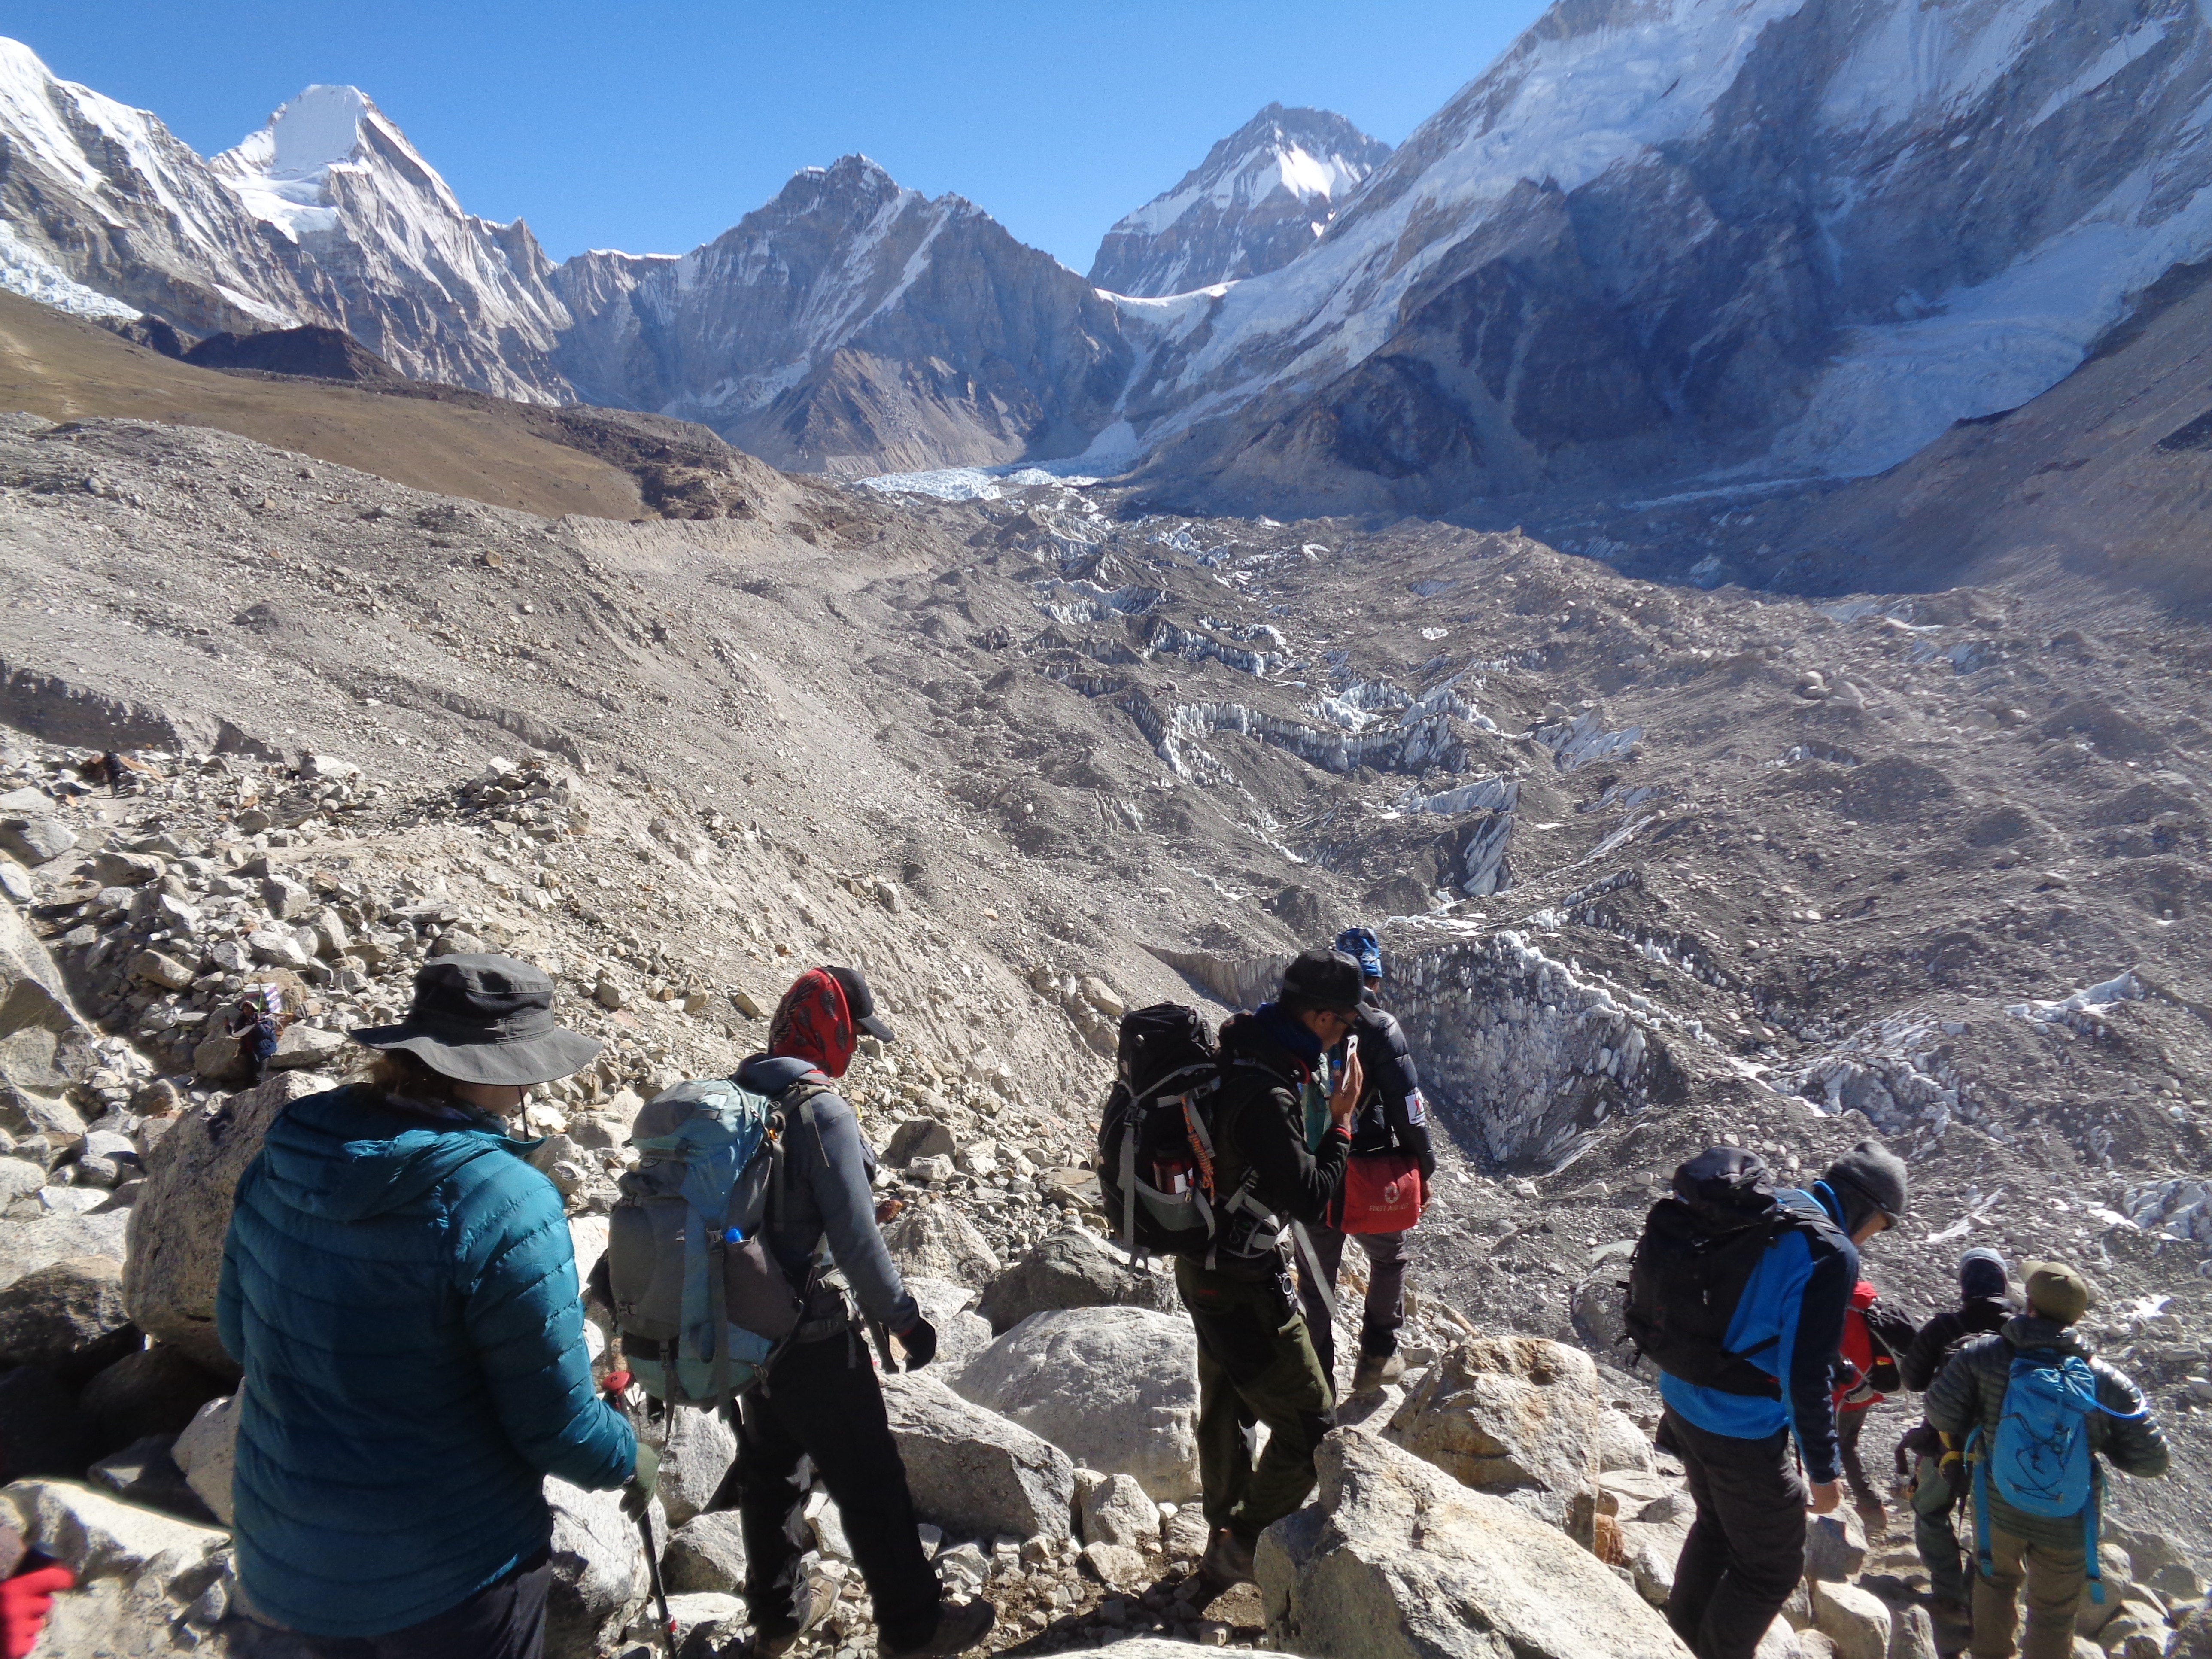 Reaching the Khumbu Glacier